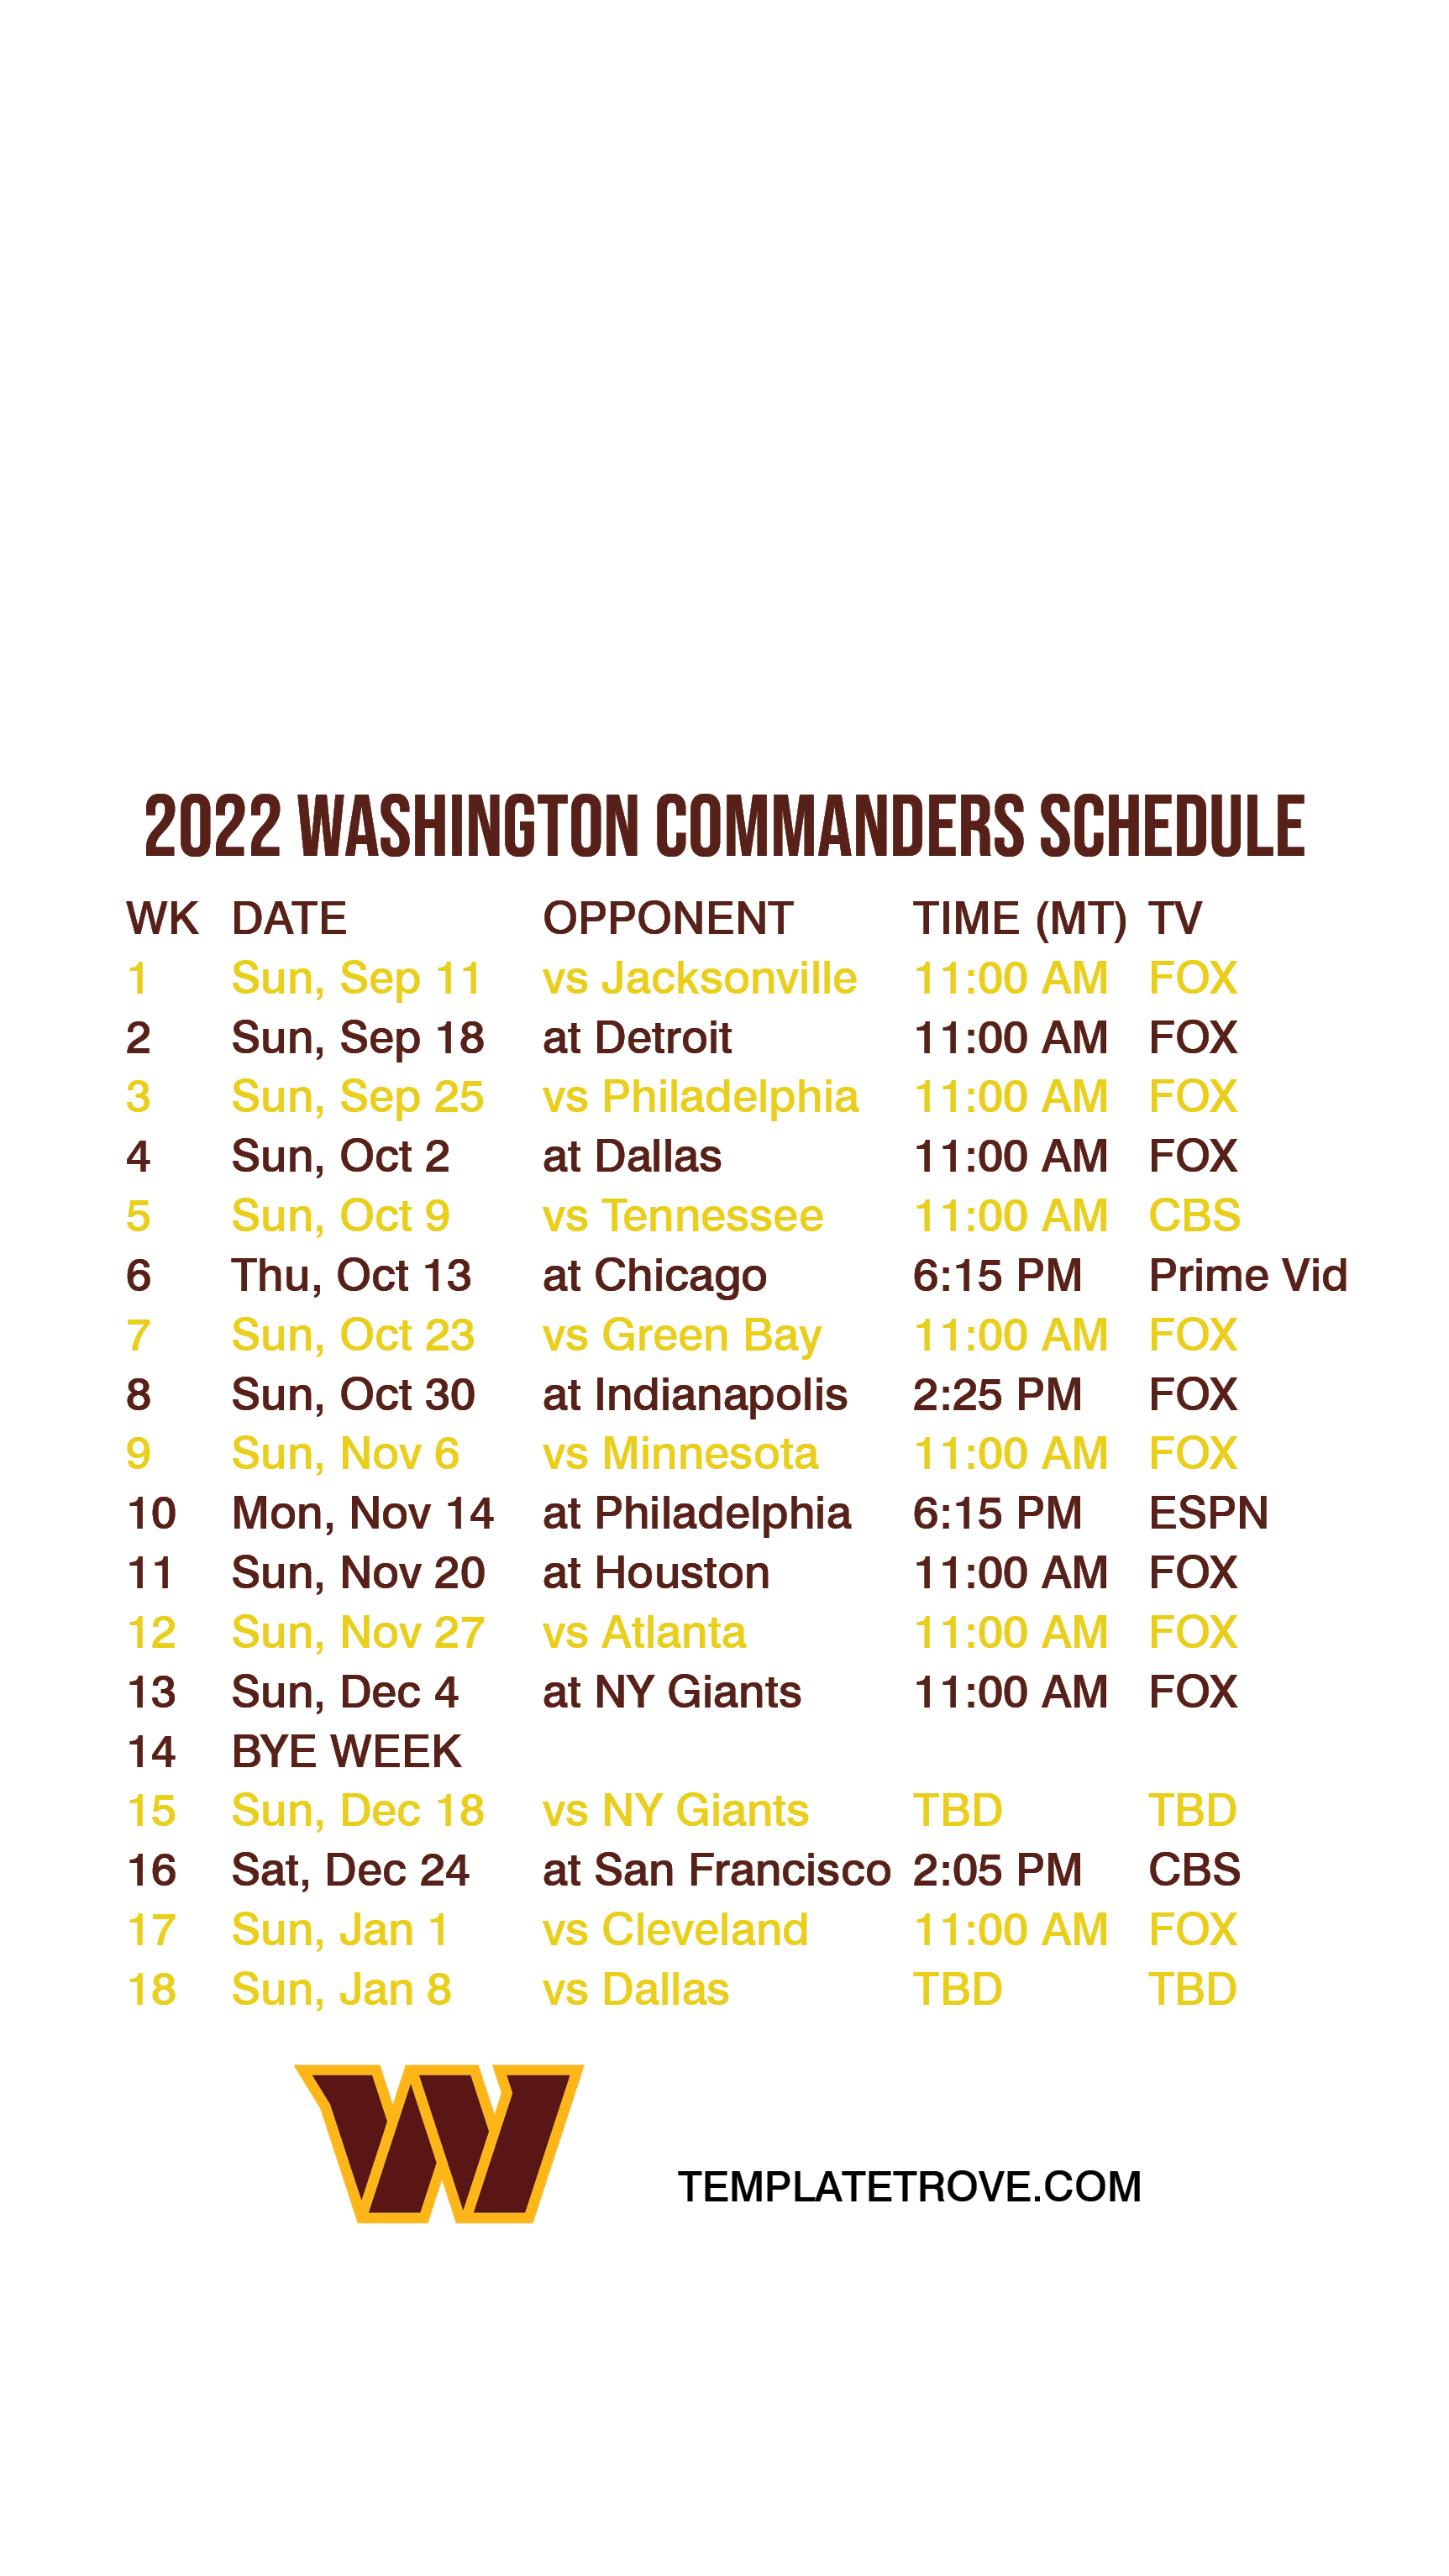 2022-2023 Washington Commanders Lock Screen Schedule for iPhone 6-7-8 Plus